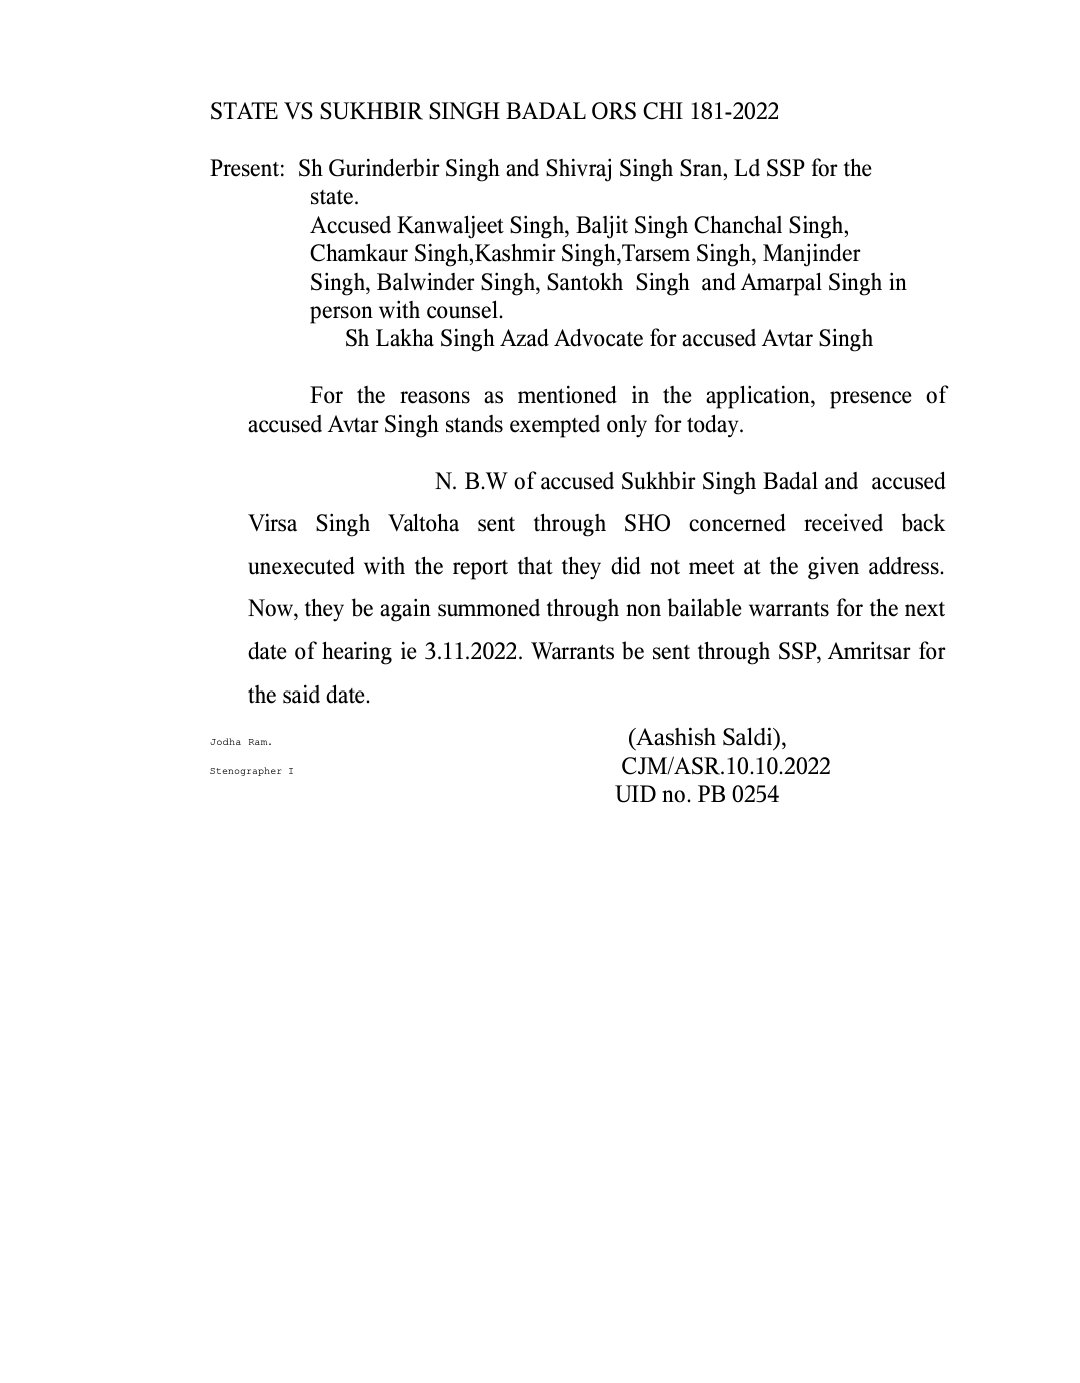 Non-Bailable warrant issued against the Sukhbir Badal 